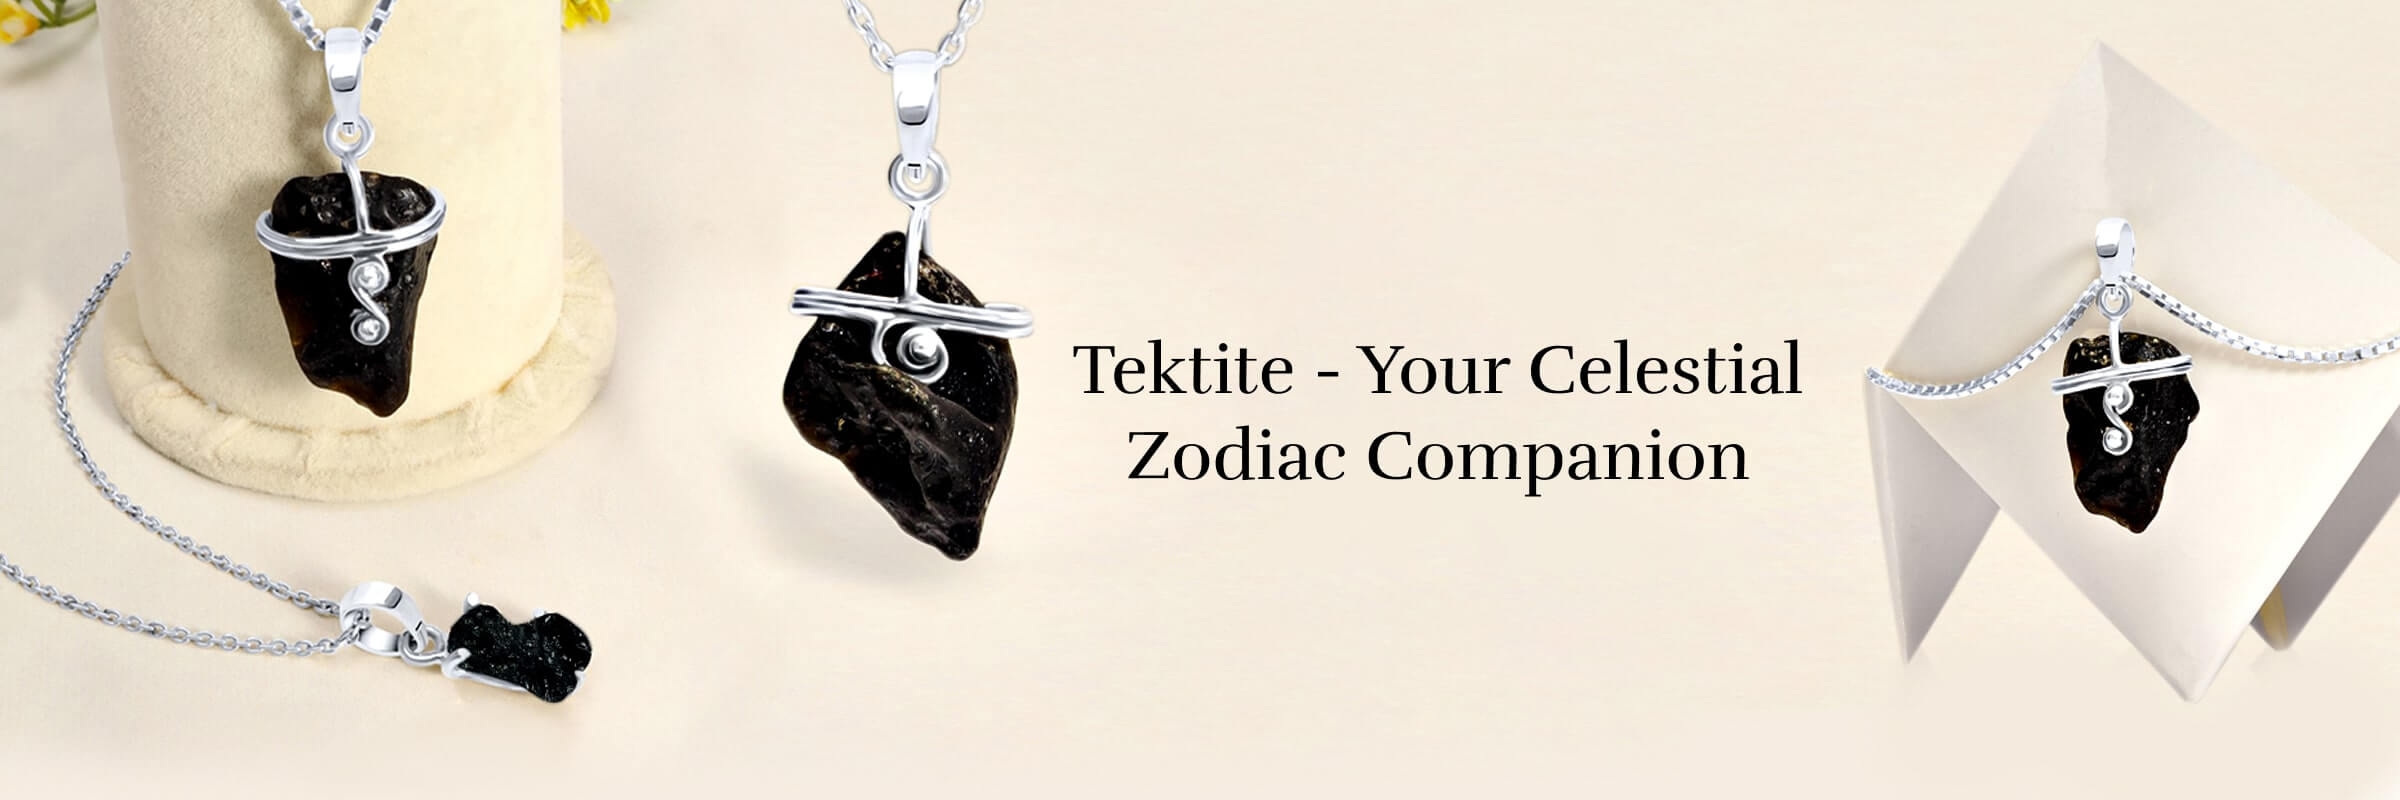 Zodiac sign Of Tektite